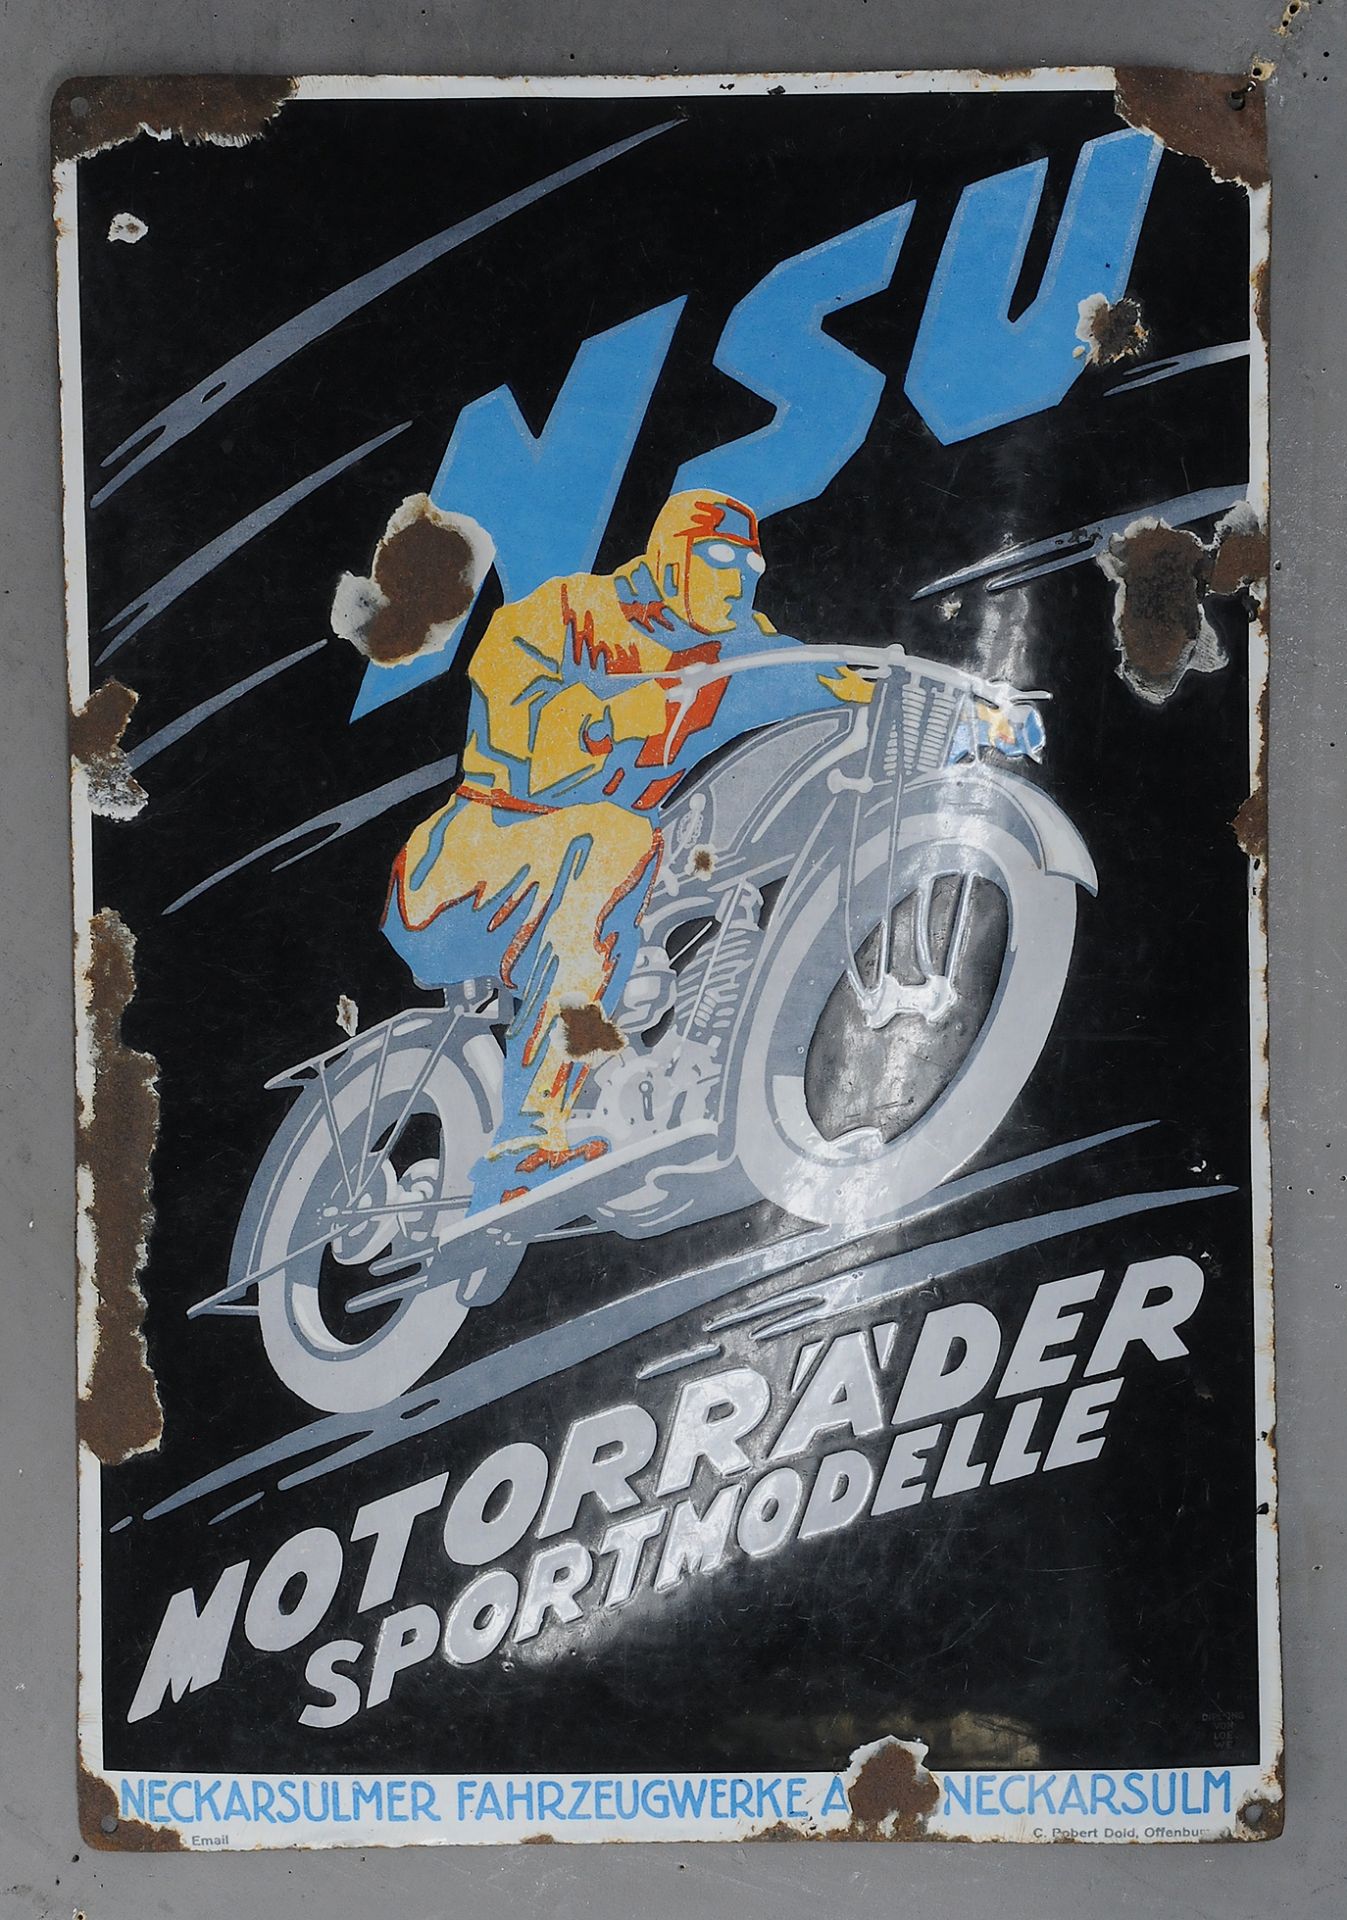 NSU Motorräder Sportmodell - Bild 3 aus 3